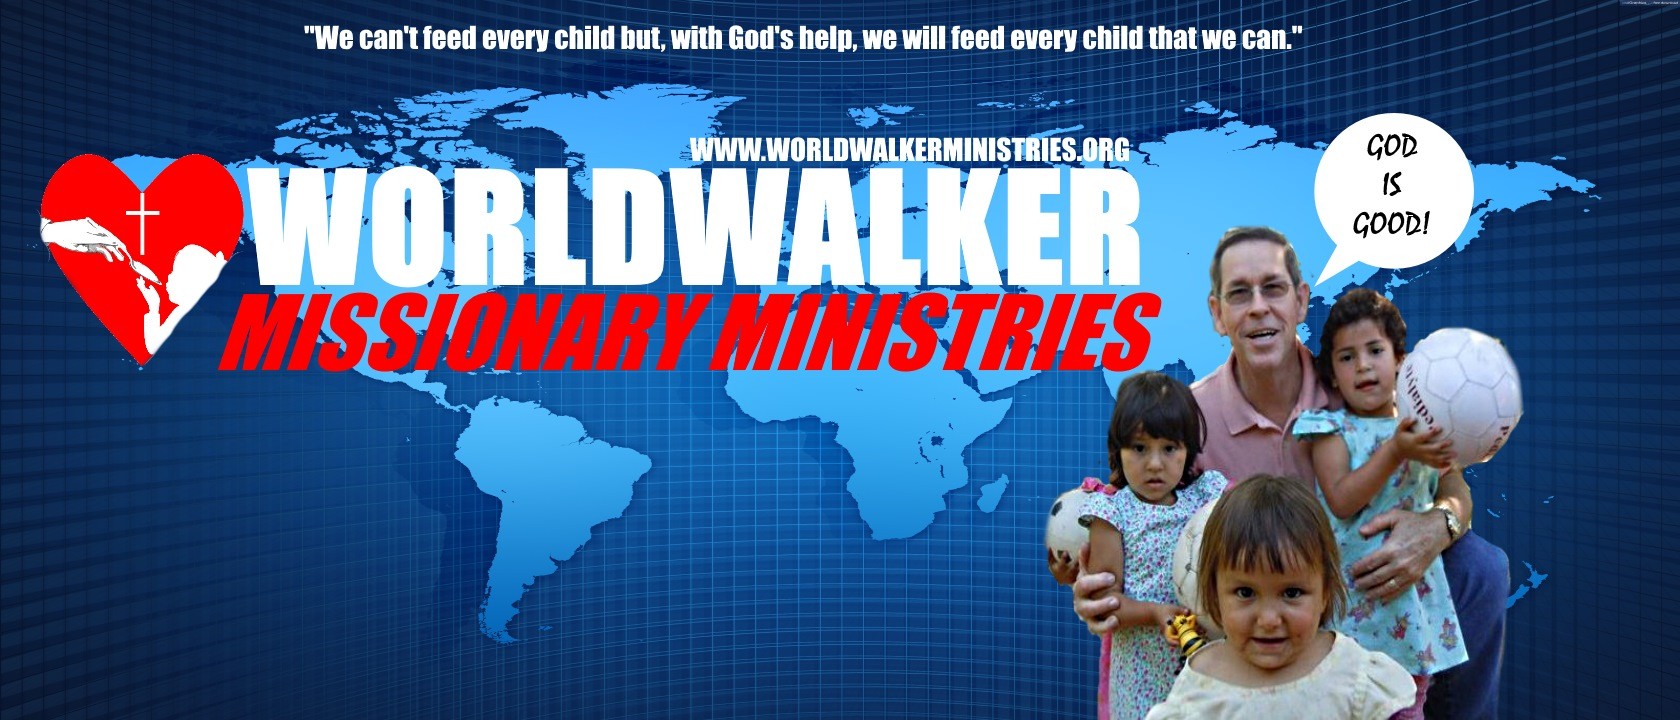 cropped-Worldwalker-website-slider-final.jpg